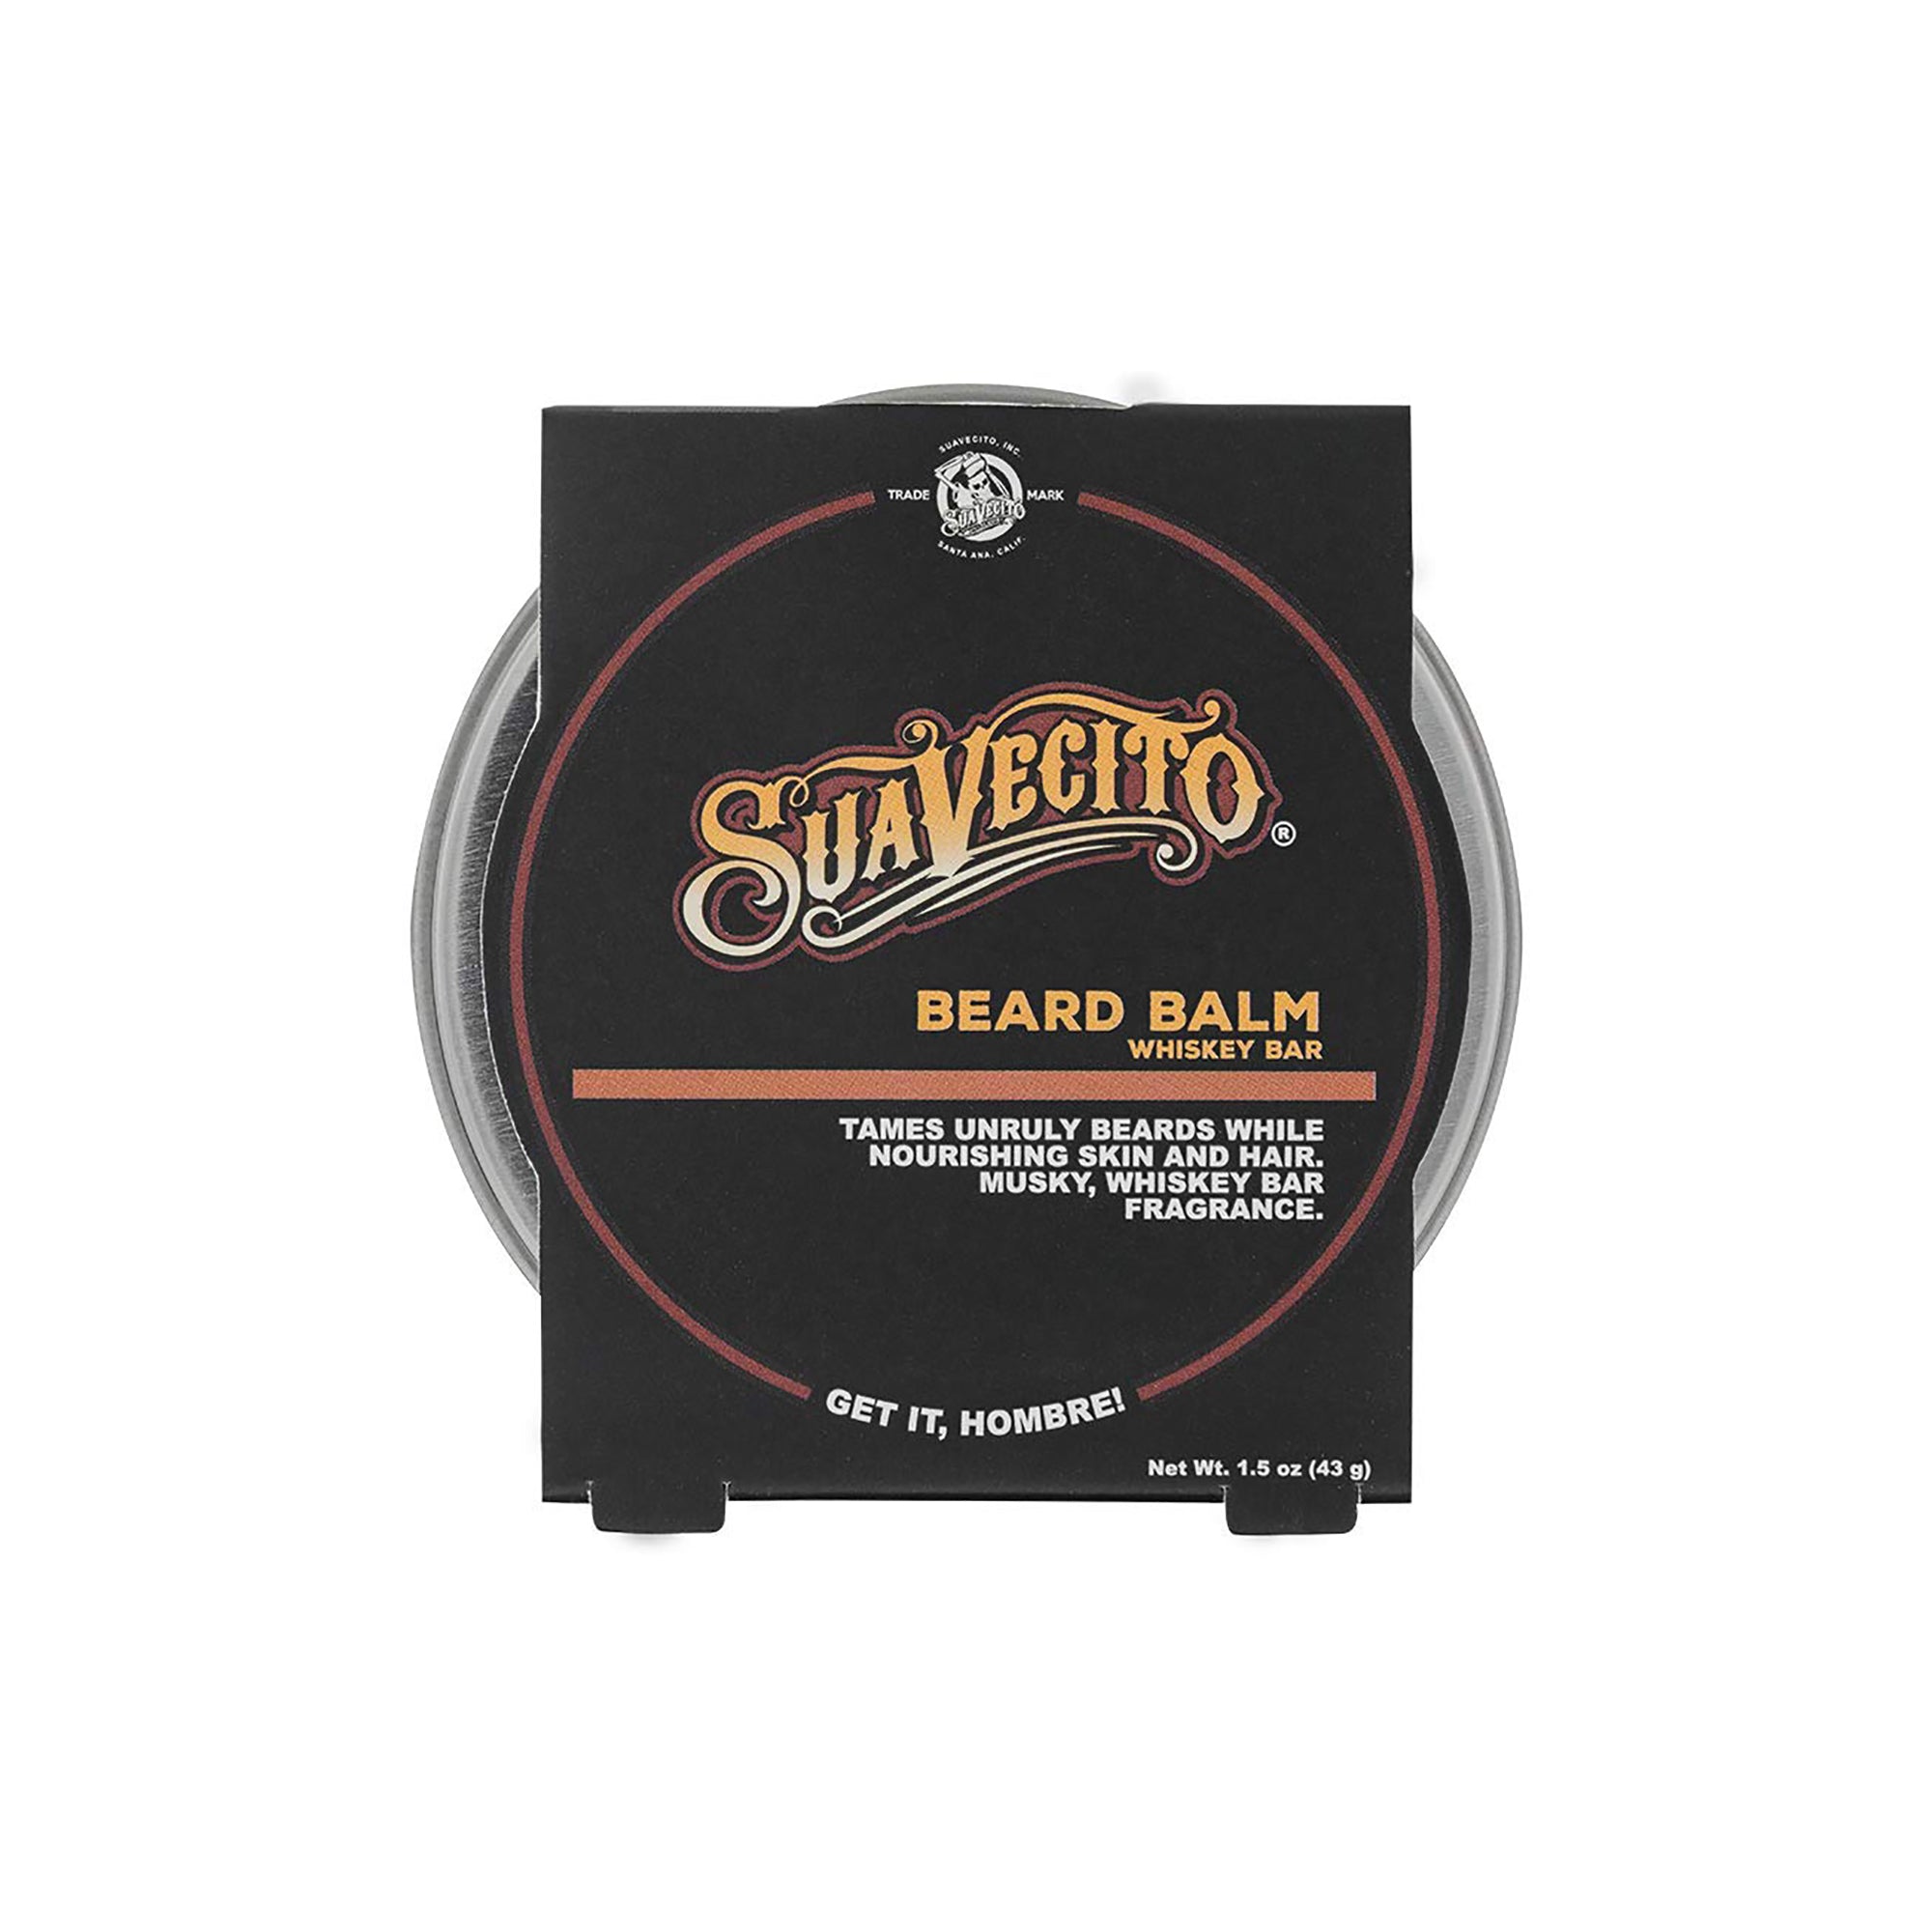 Suavecito Beard Balm / Whiskey Bar Scent